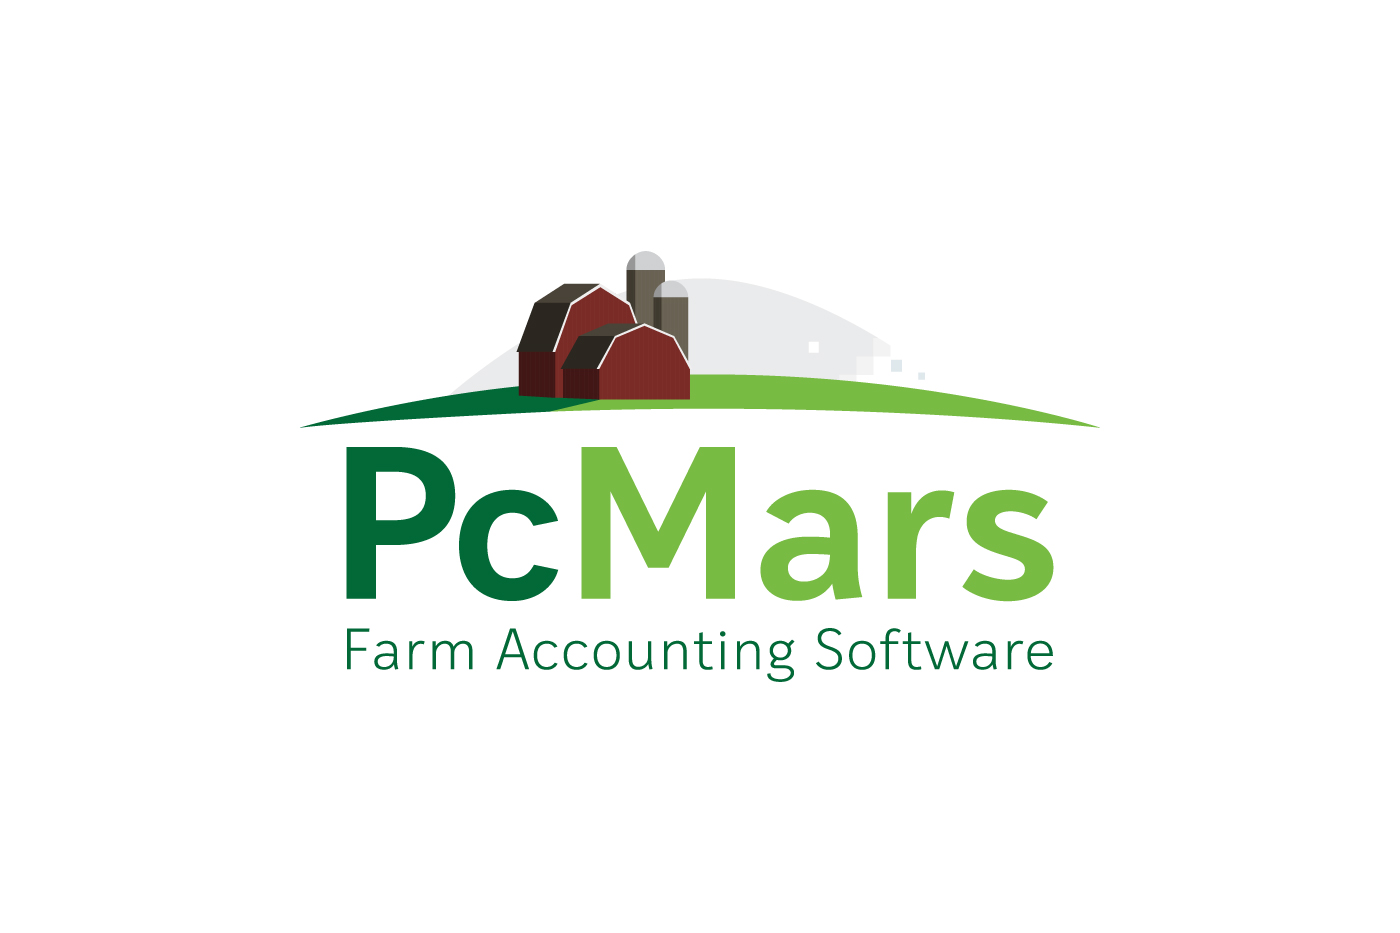 PcMars Farm Accounting Software logo design